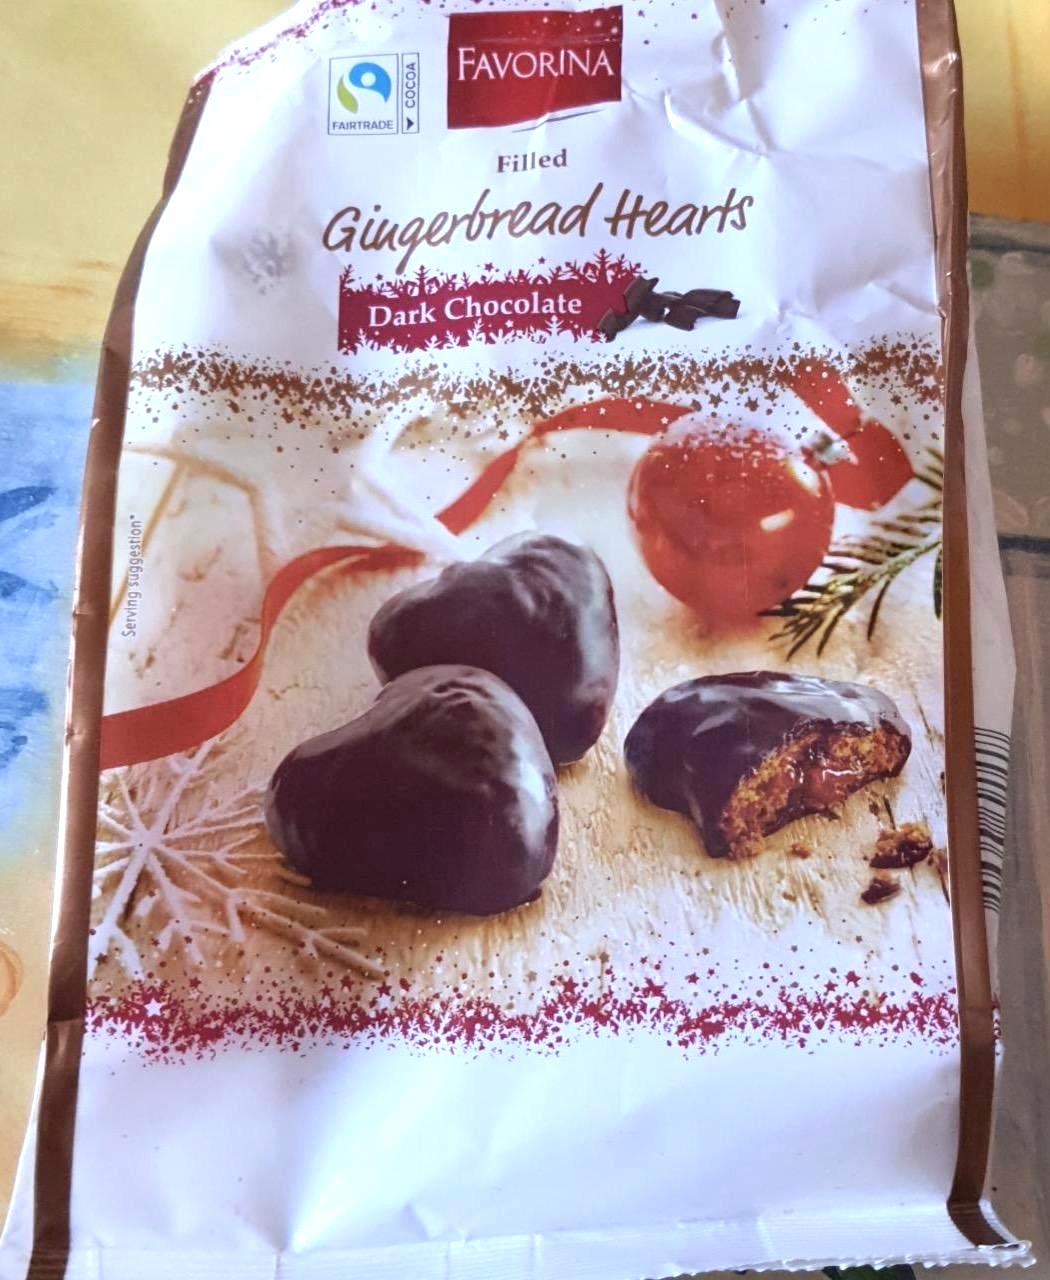 Képek - Filled Gingerbread Hearts Dark Chocolate Favorina